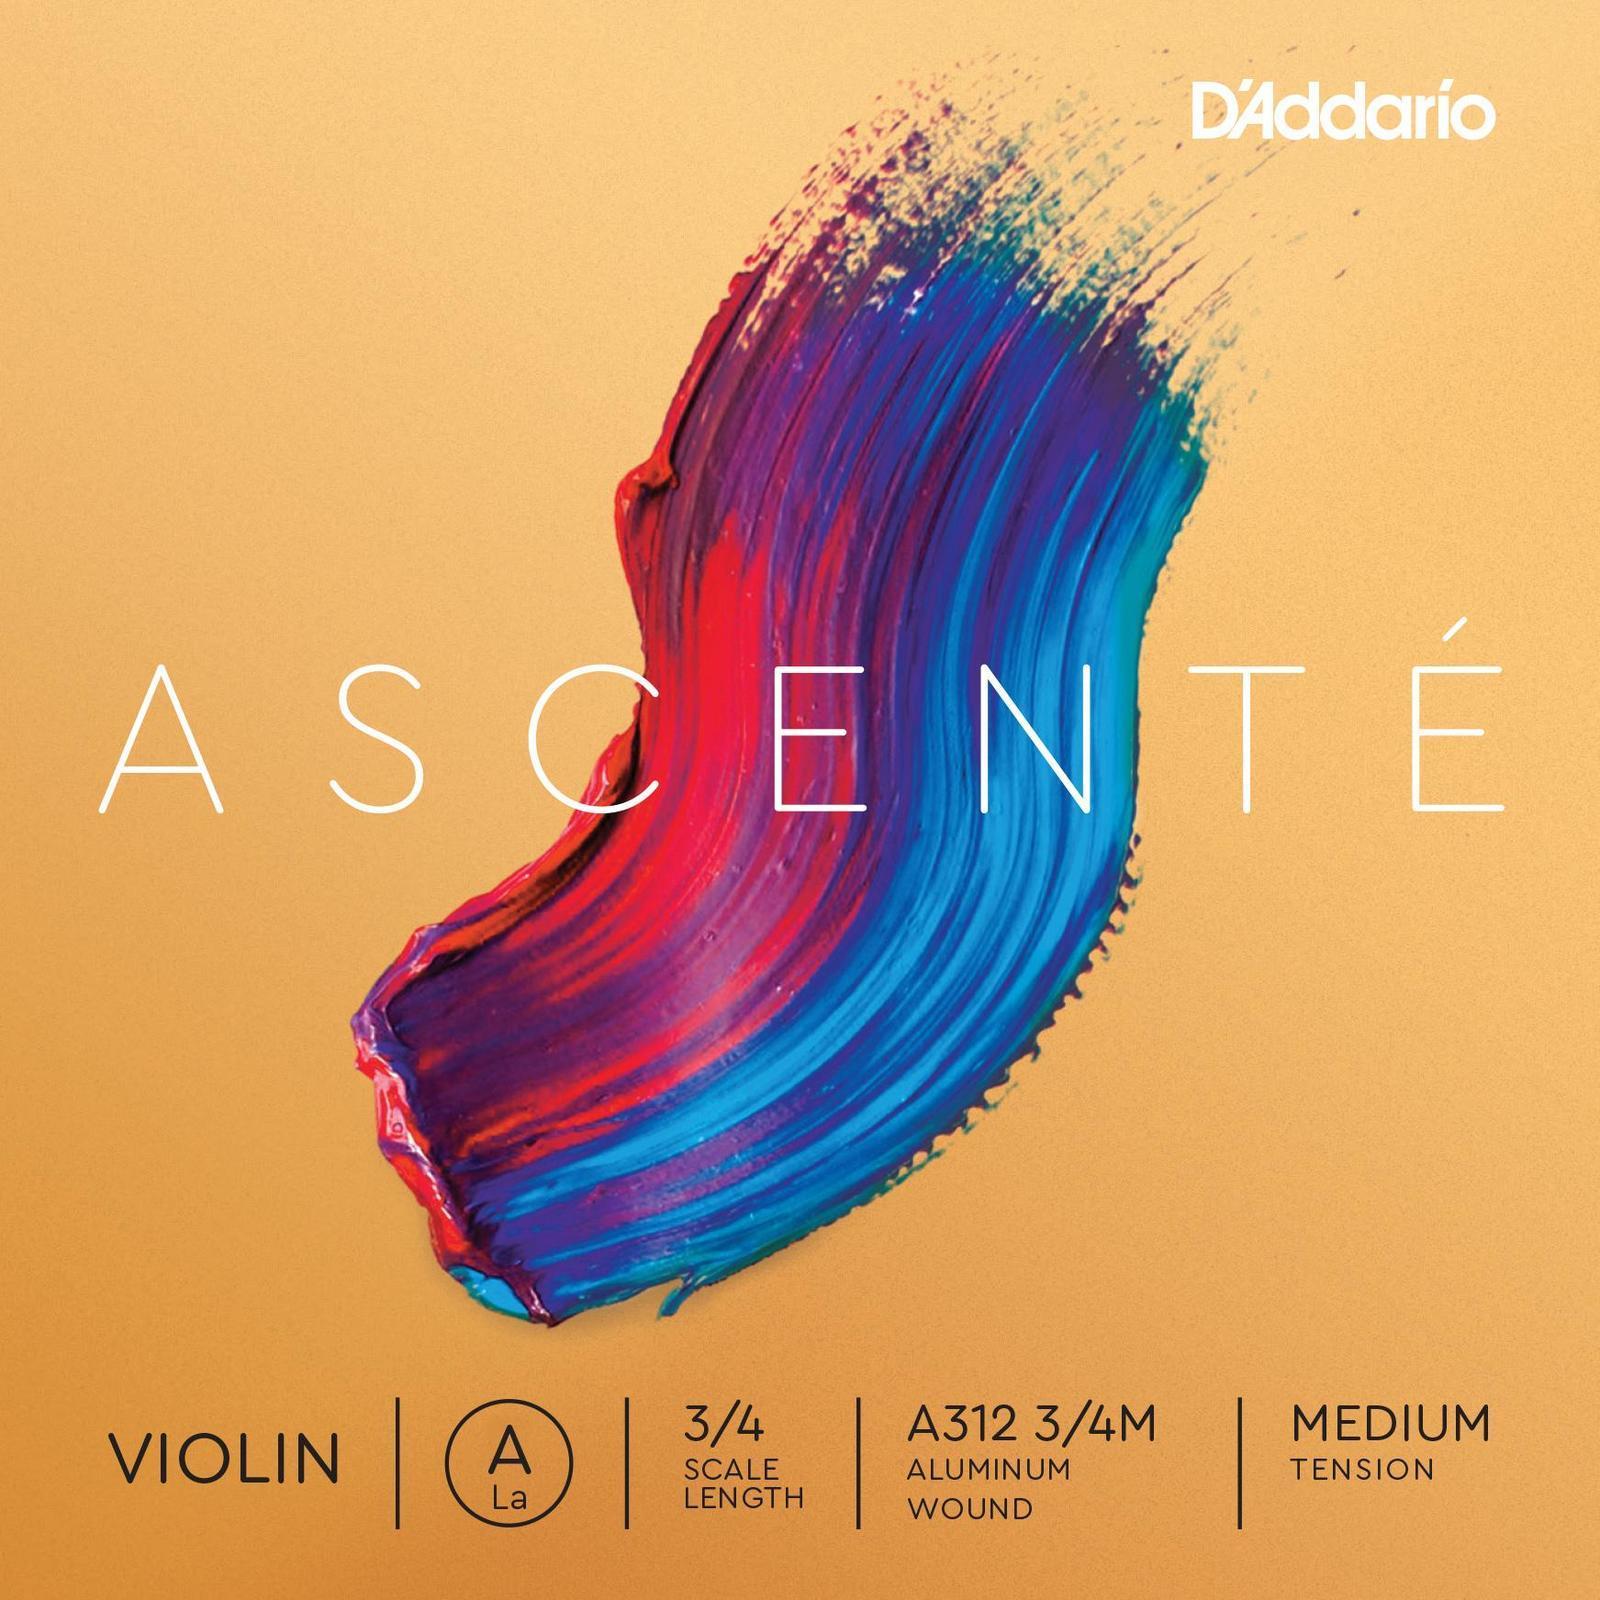 D'Addario Ascente Violin A String, 3/4 Scale, Medium Tension